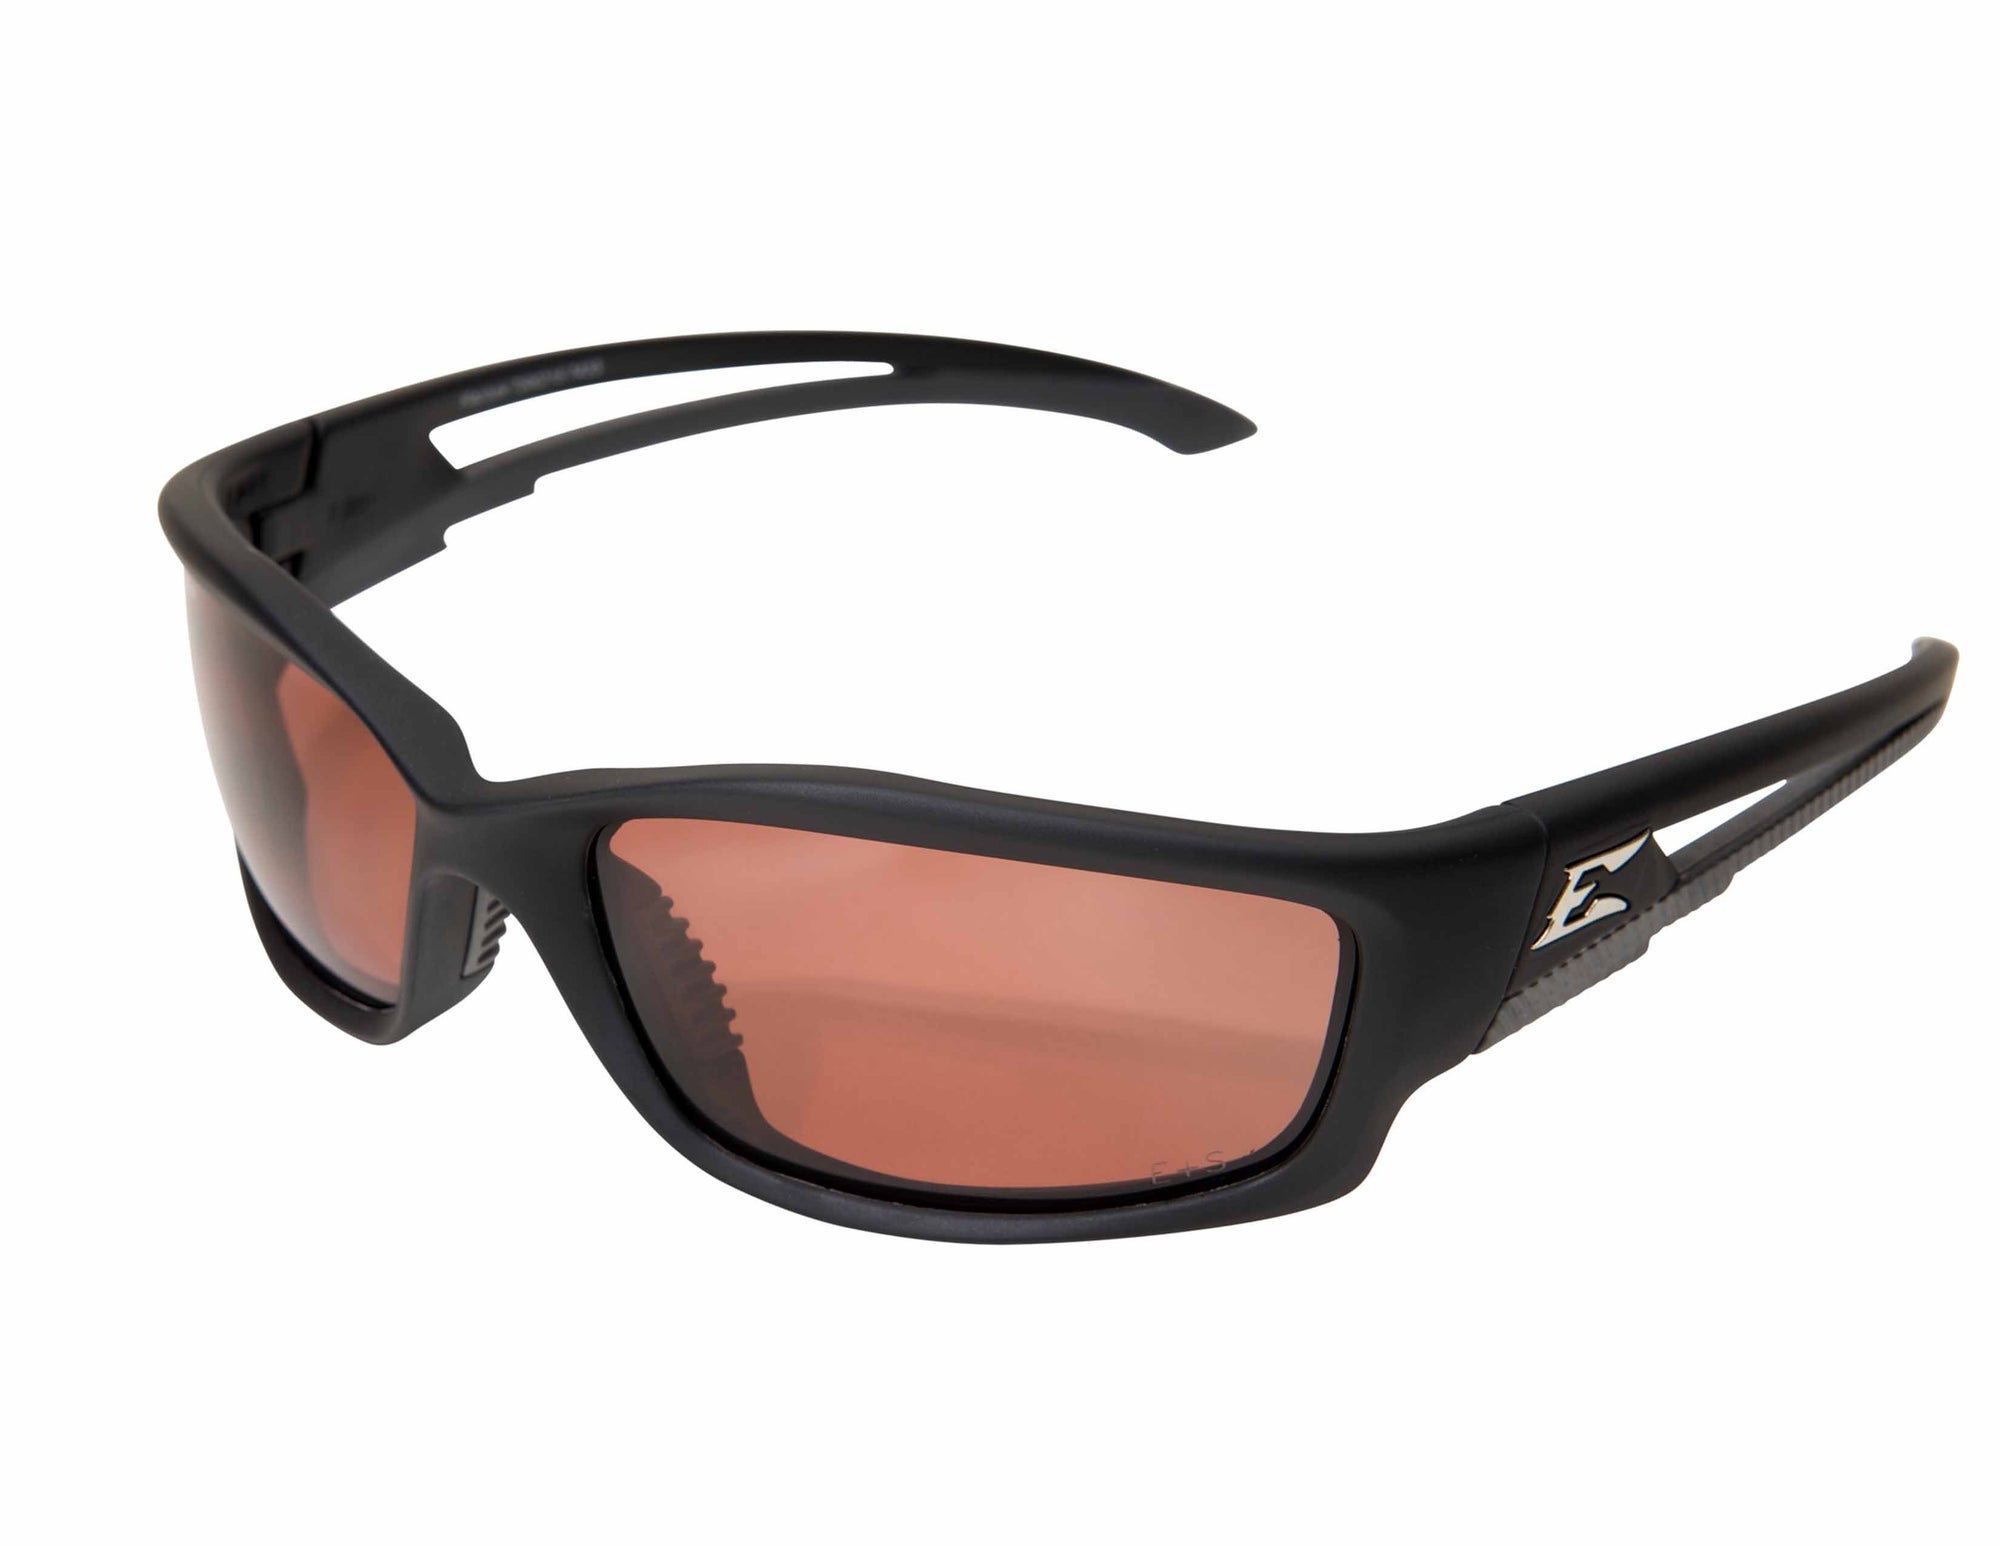 Kazbec polarized copper sunglasses